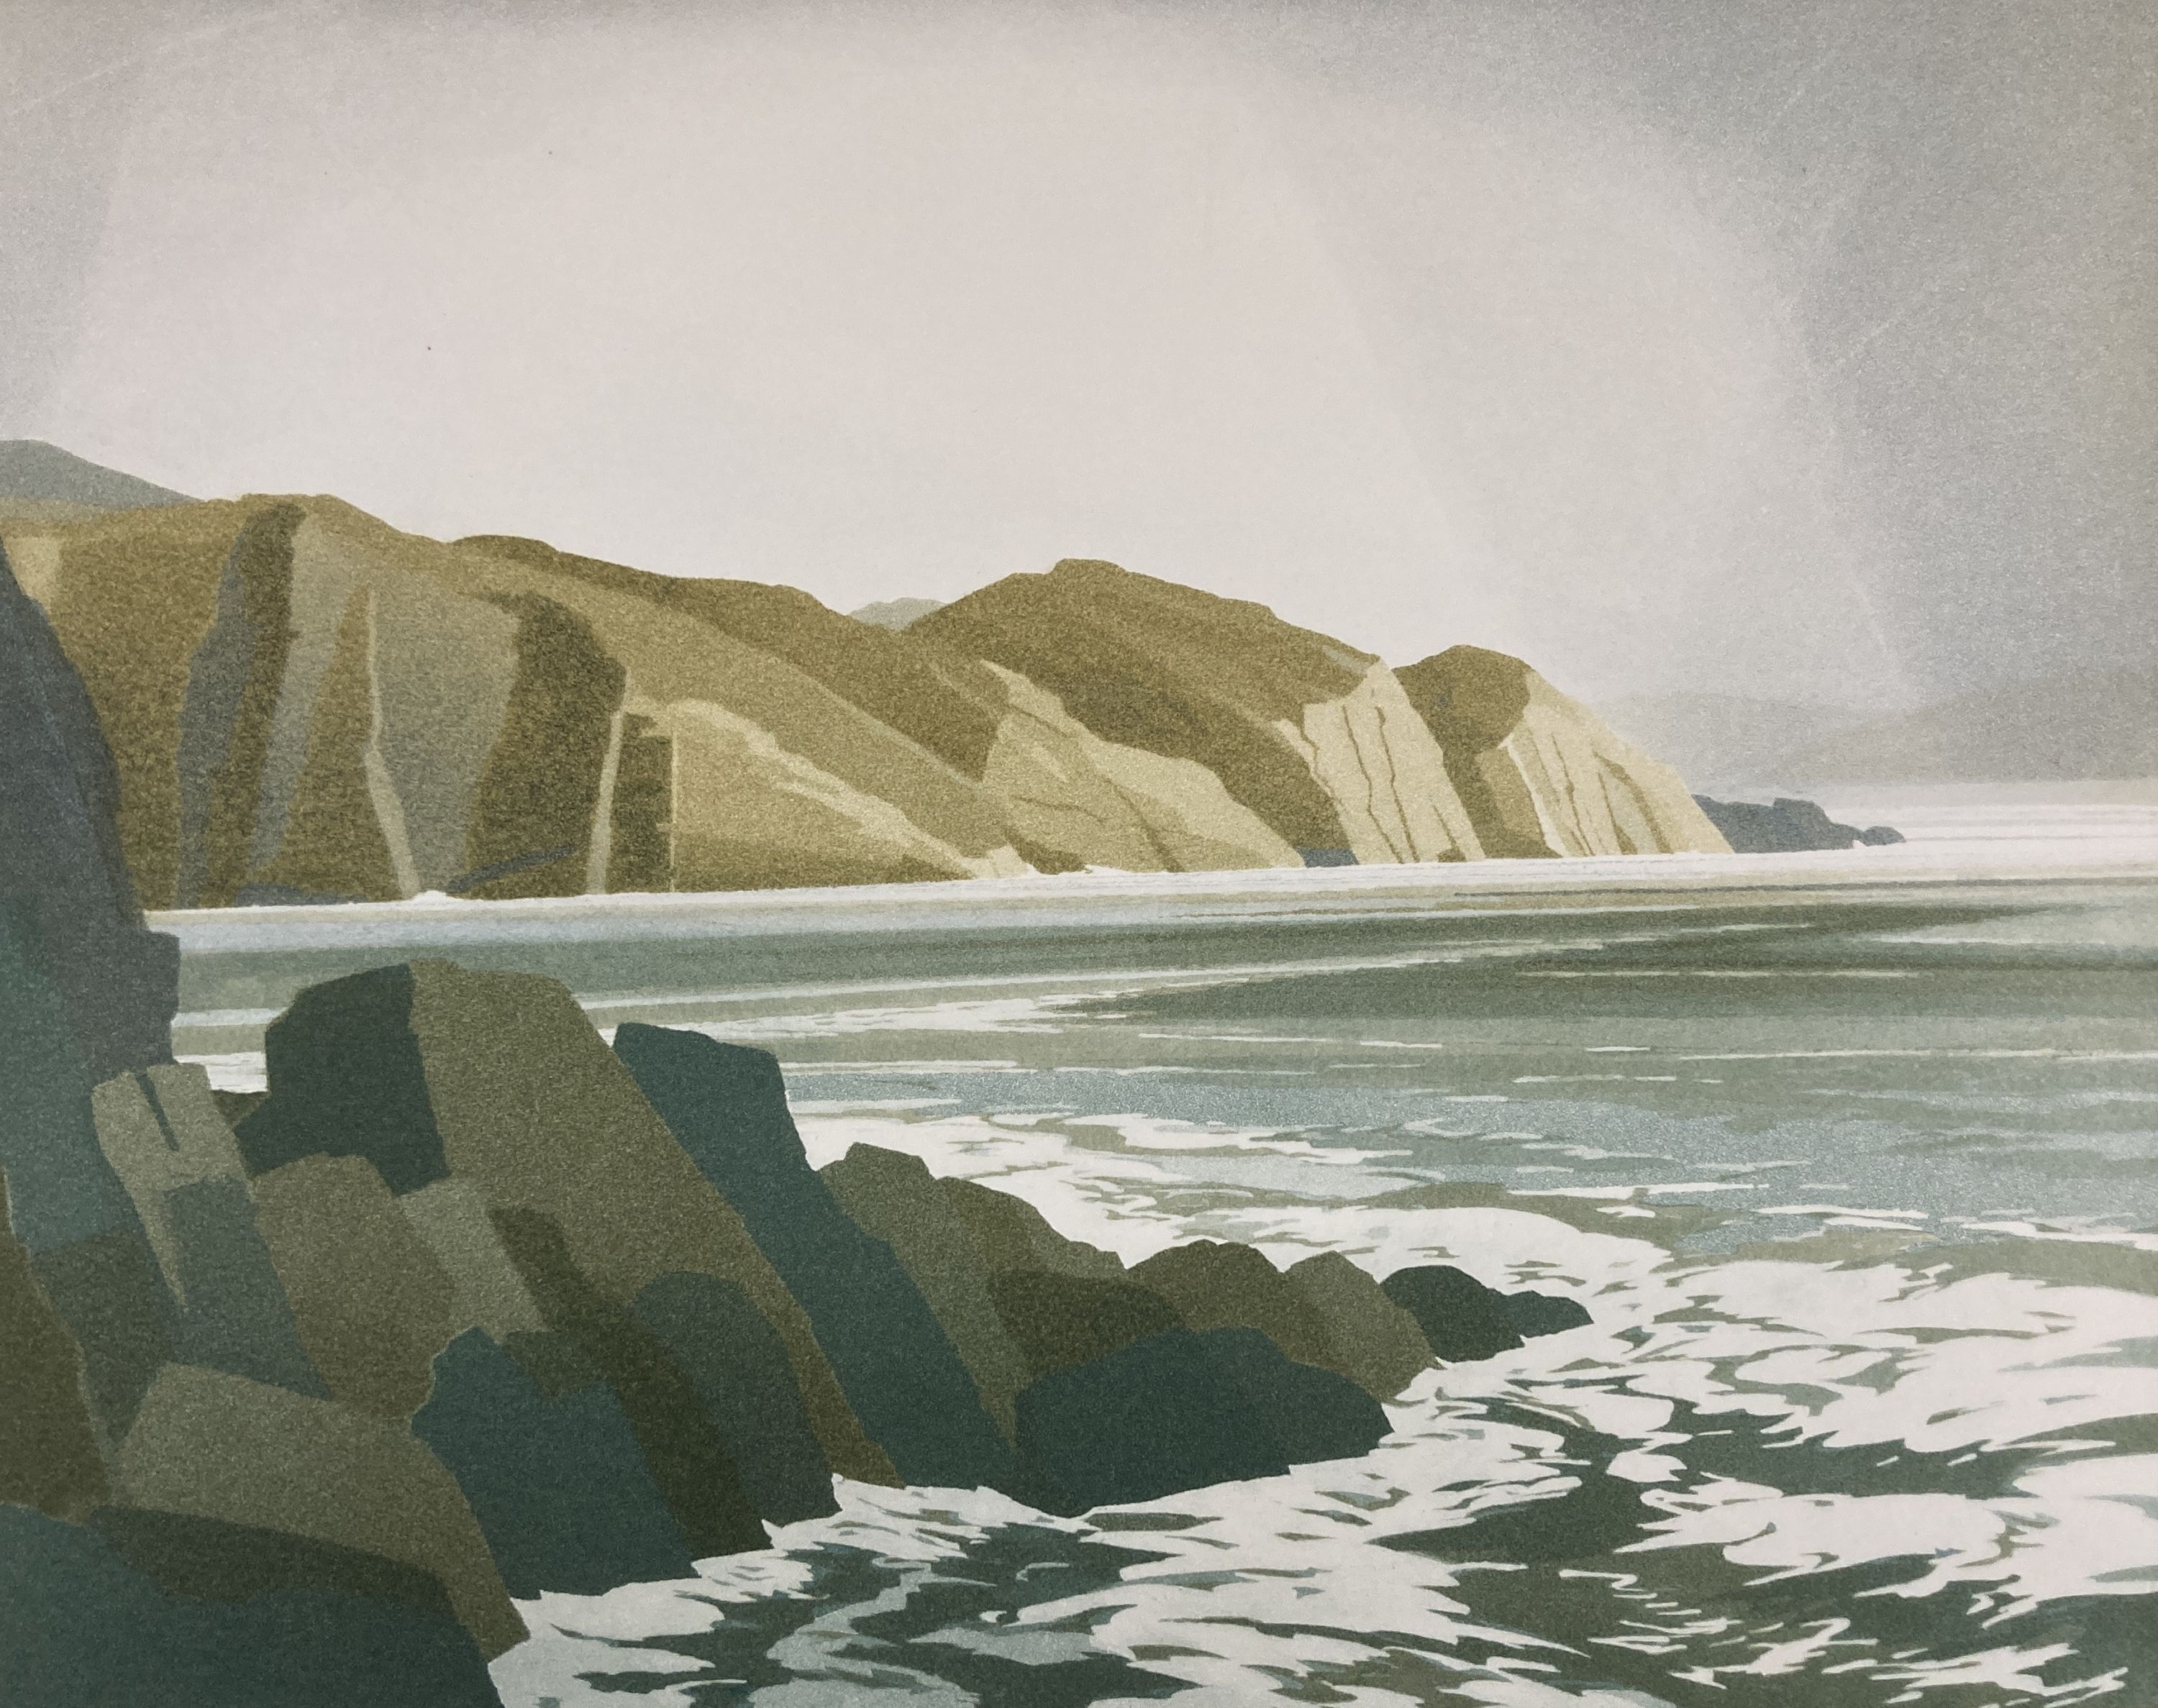 Michael Fairclough, limited edition print, Sea cliffs, signed in pencil, 135/350, 46 x 51cm